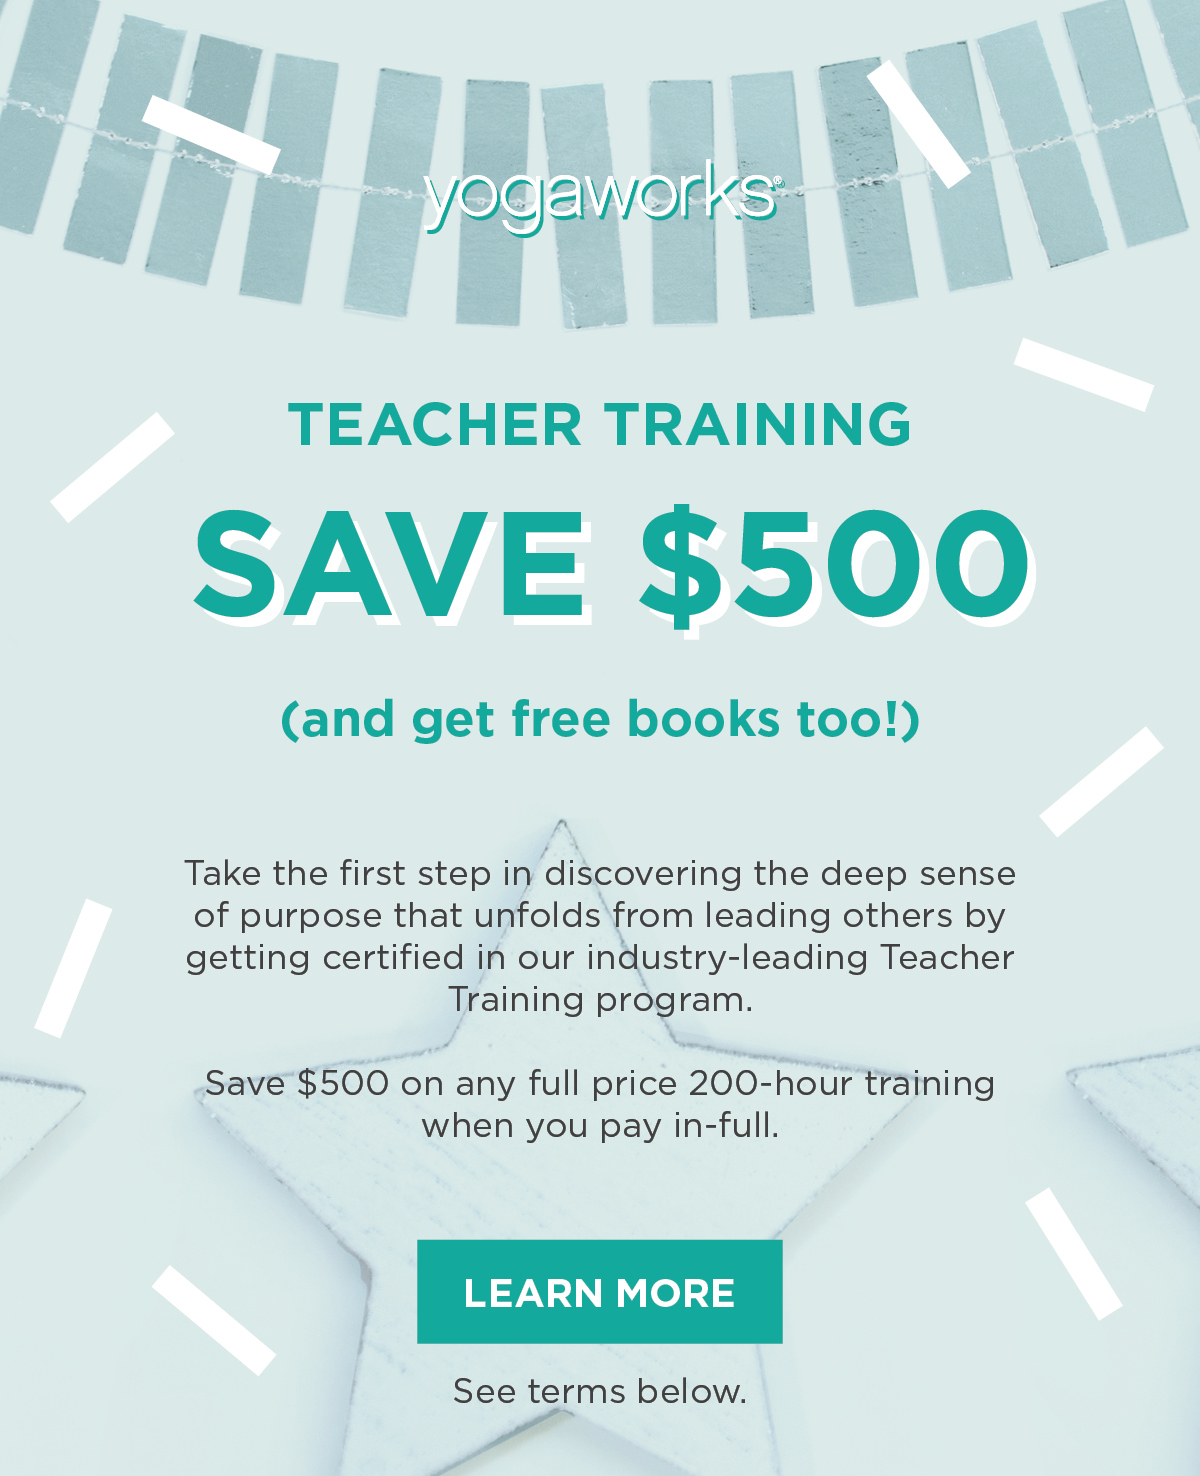 Save $500 on any full-priced 200-hour teacher training